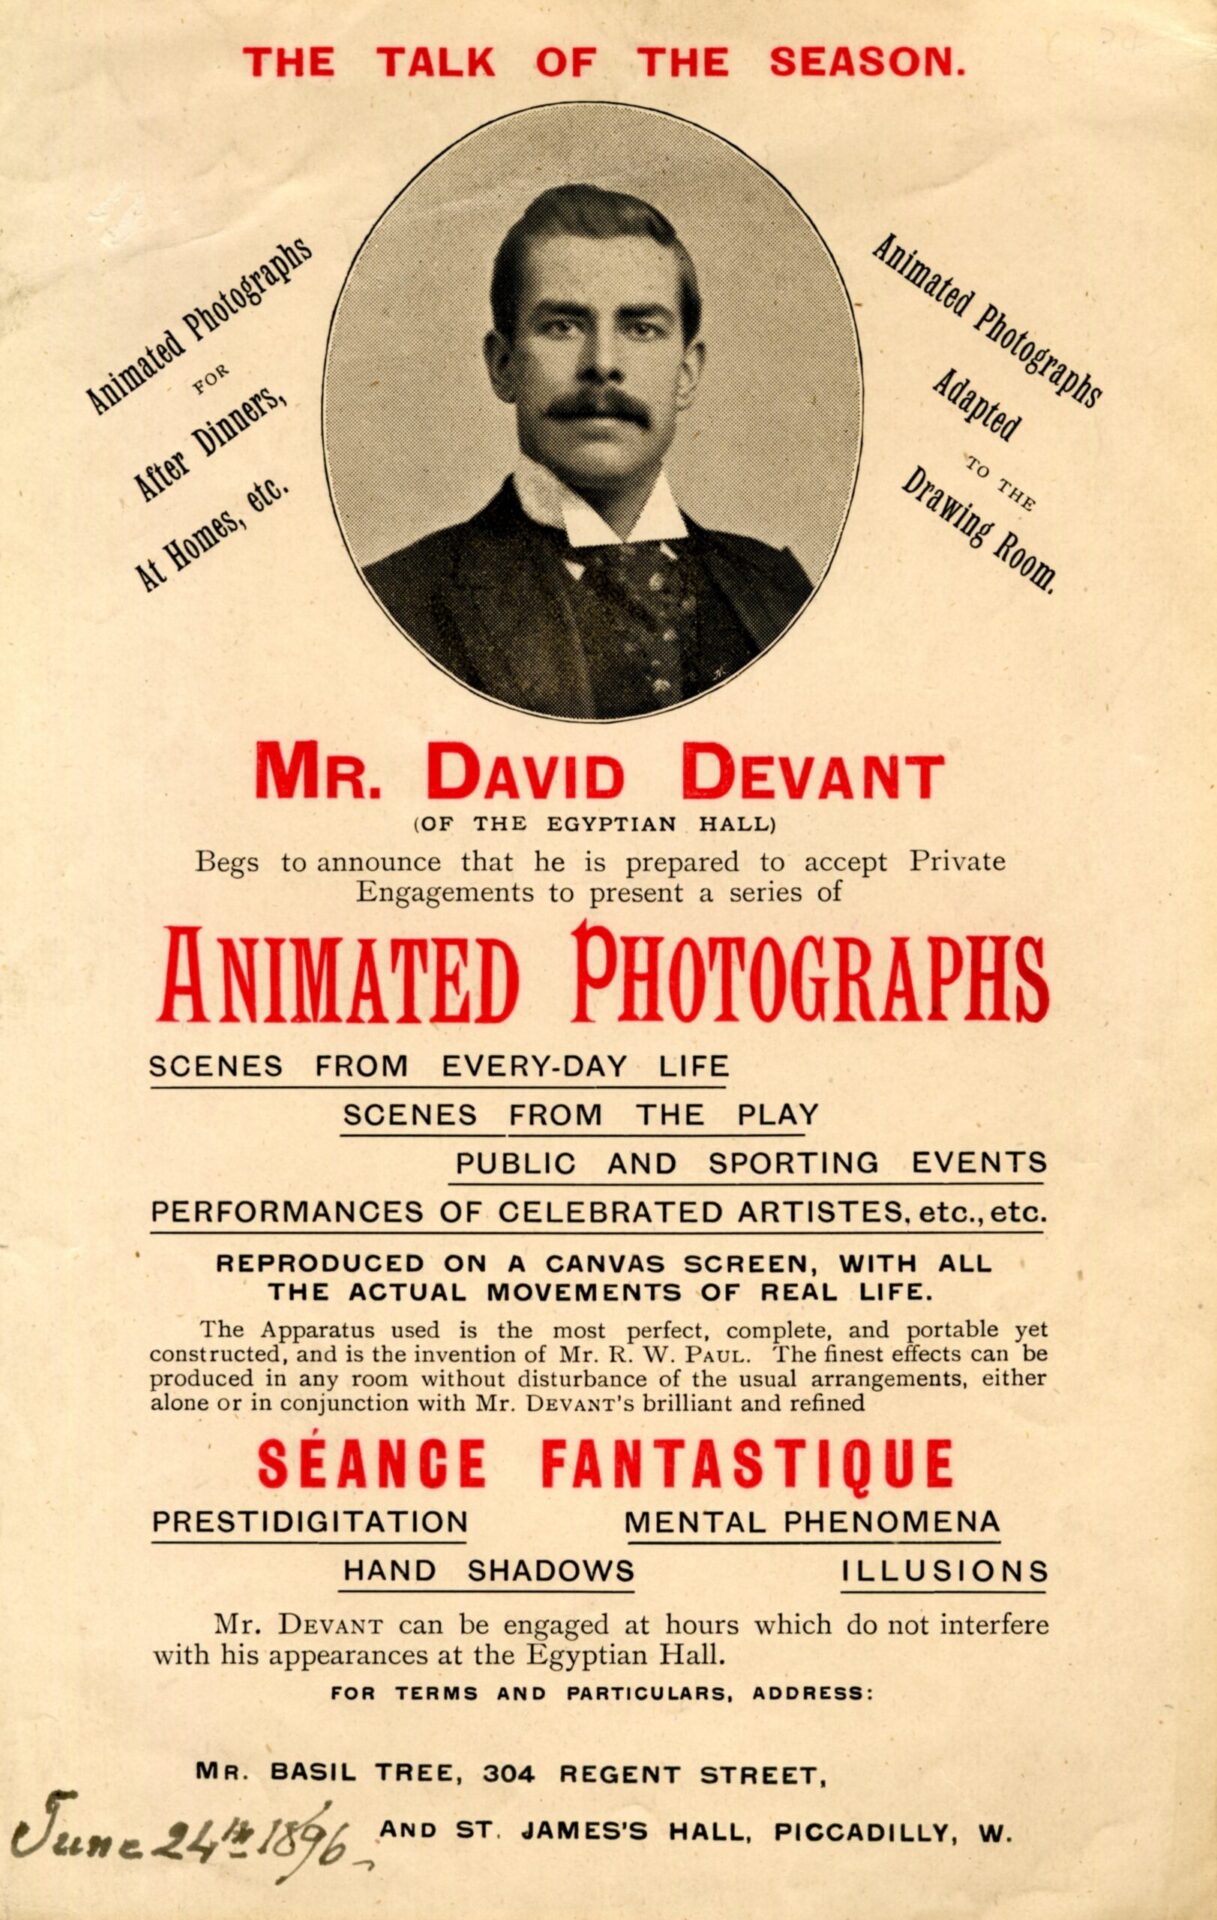 Publicity item for Mr. David Devant’s Animated Photographs and Séance Fantastique. 1896